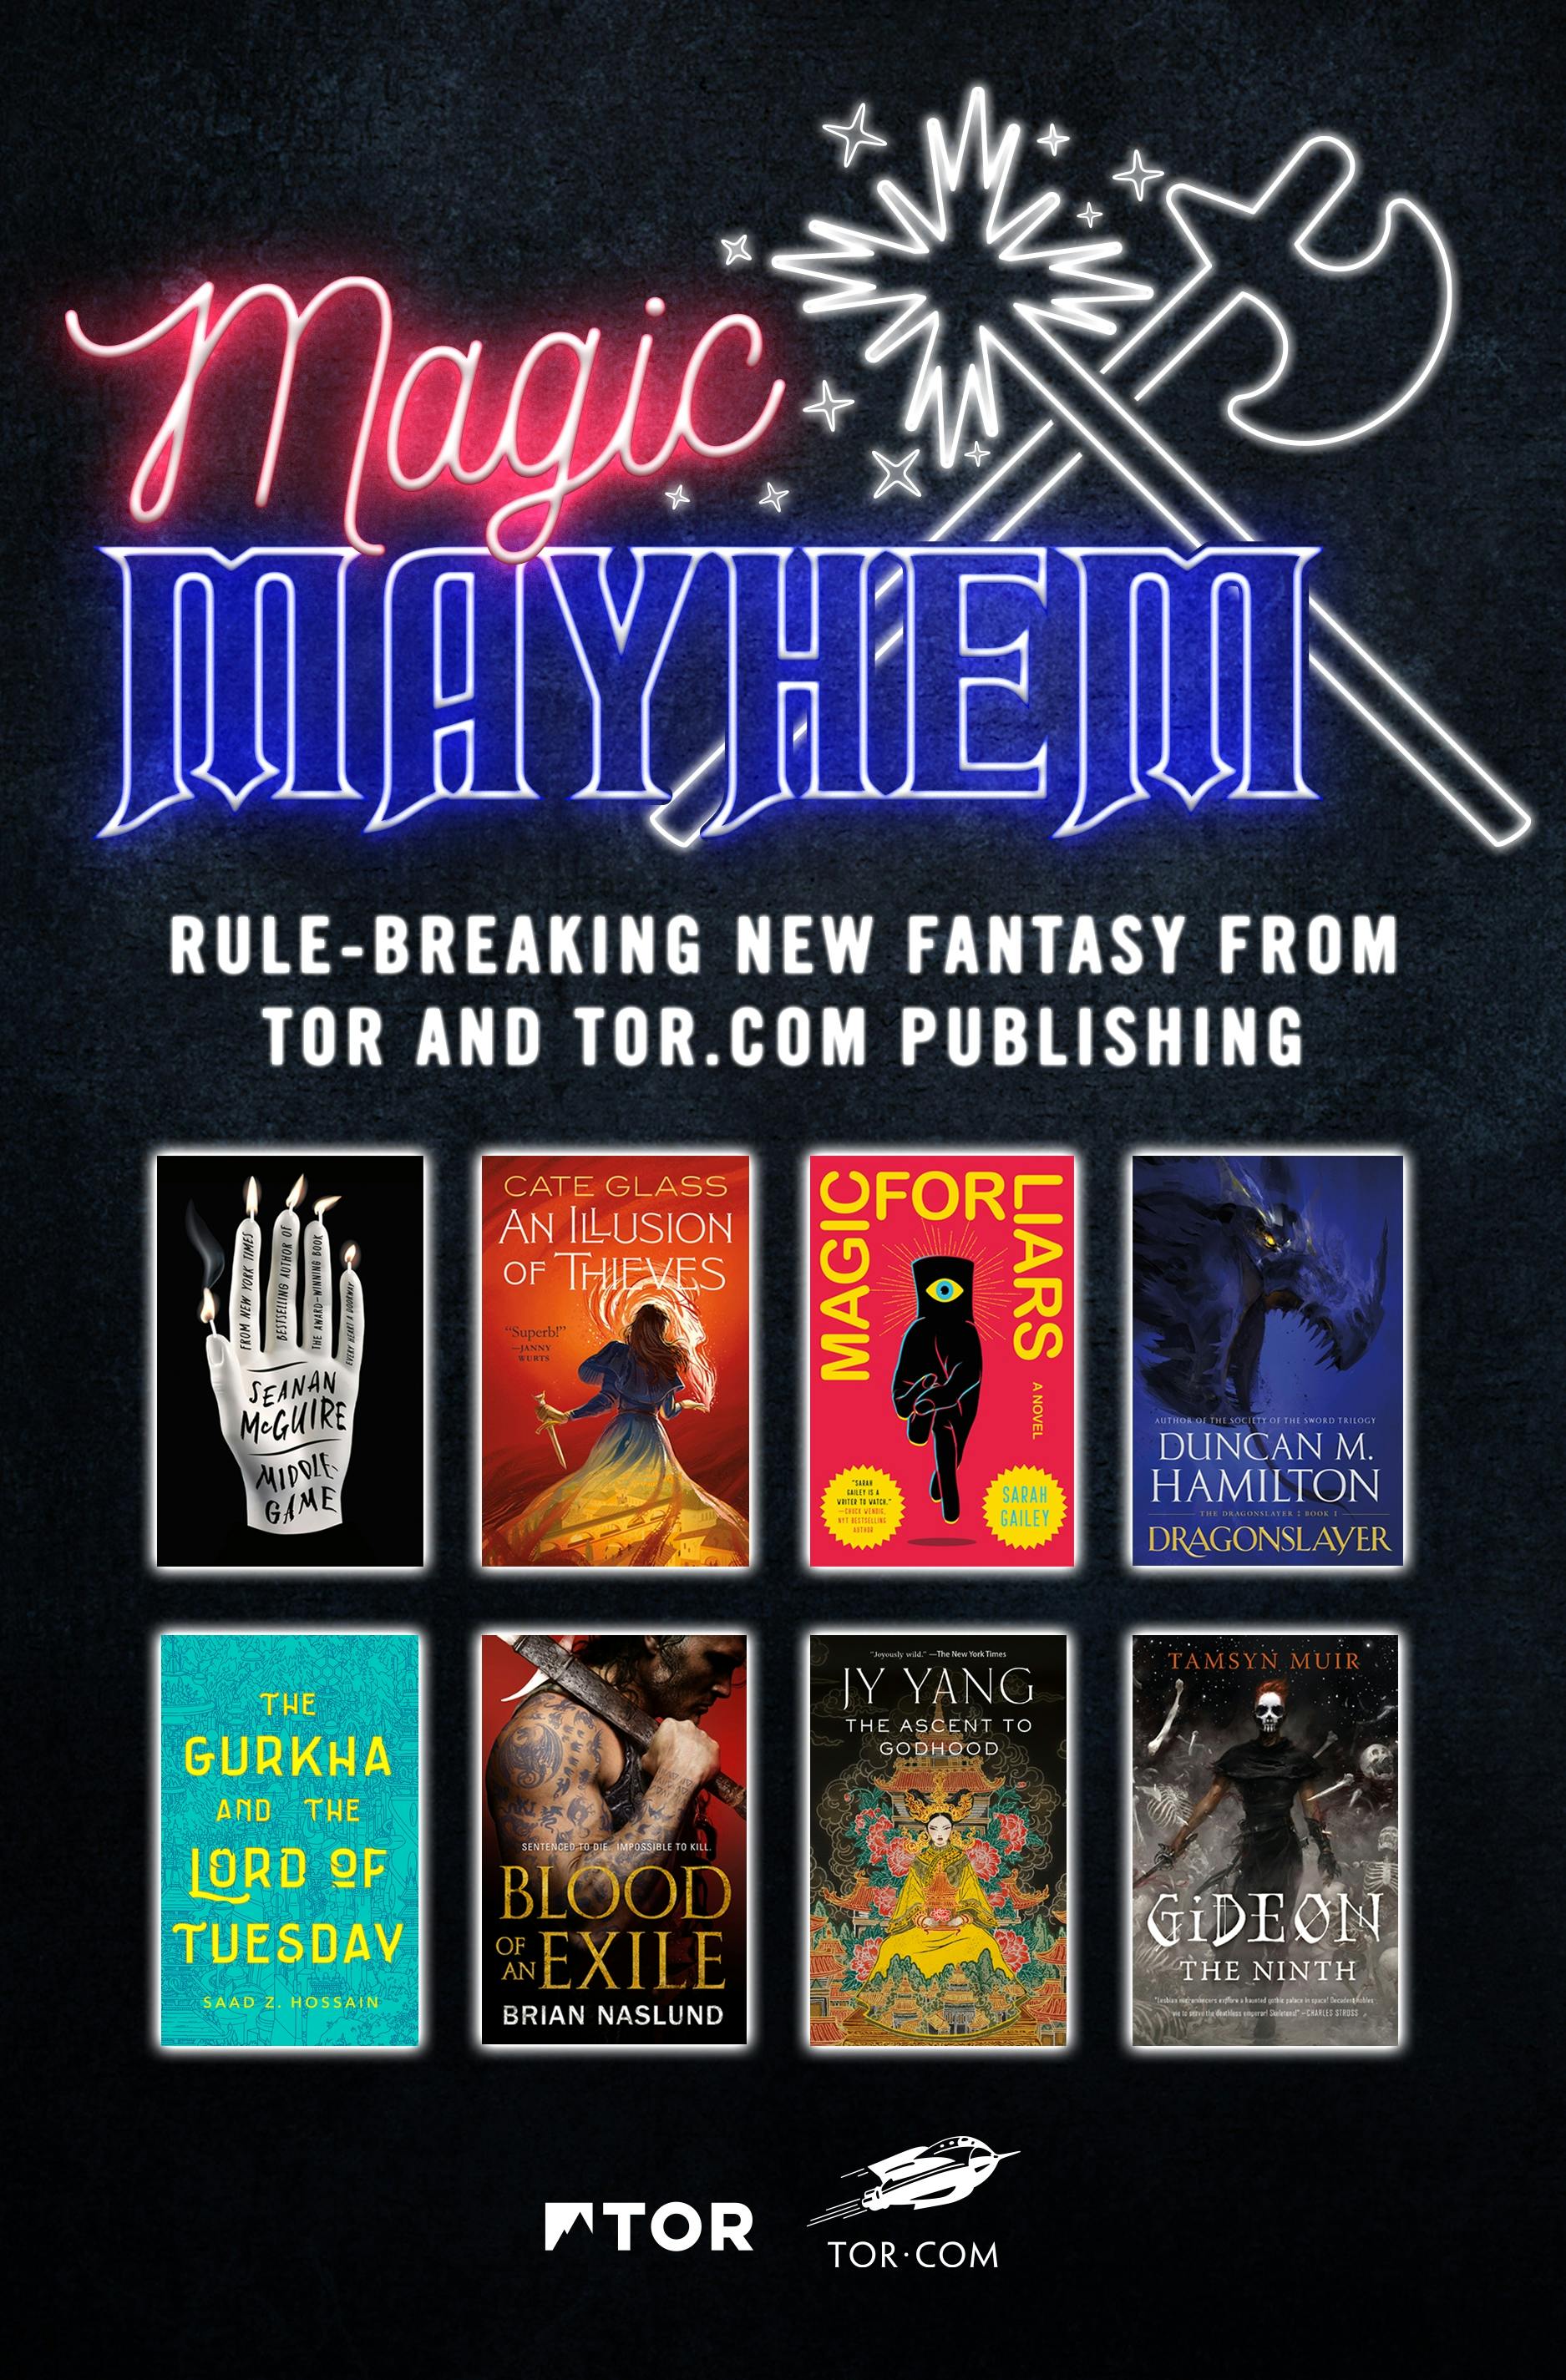 Cover for the book titled as: Magic & Mayhem Sampler